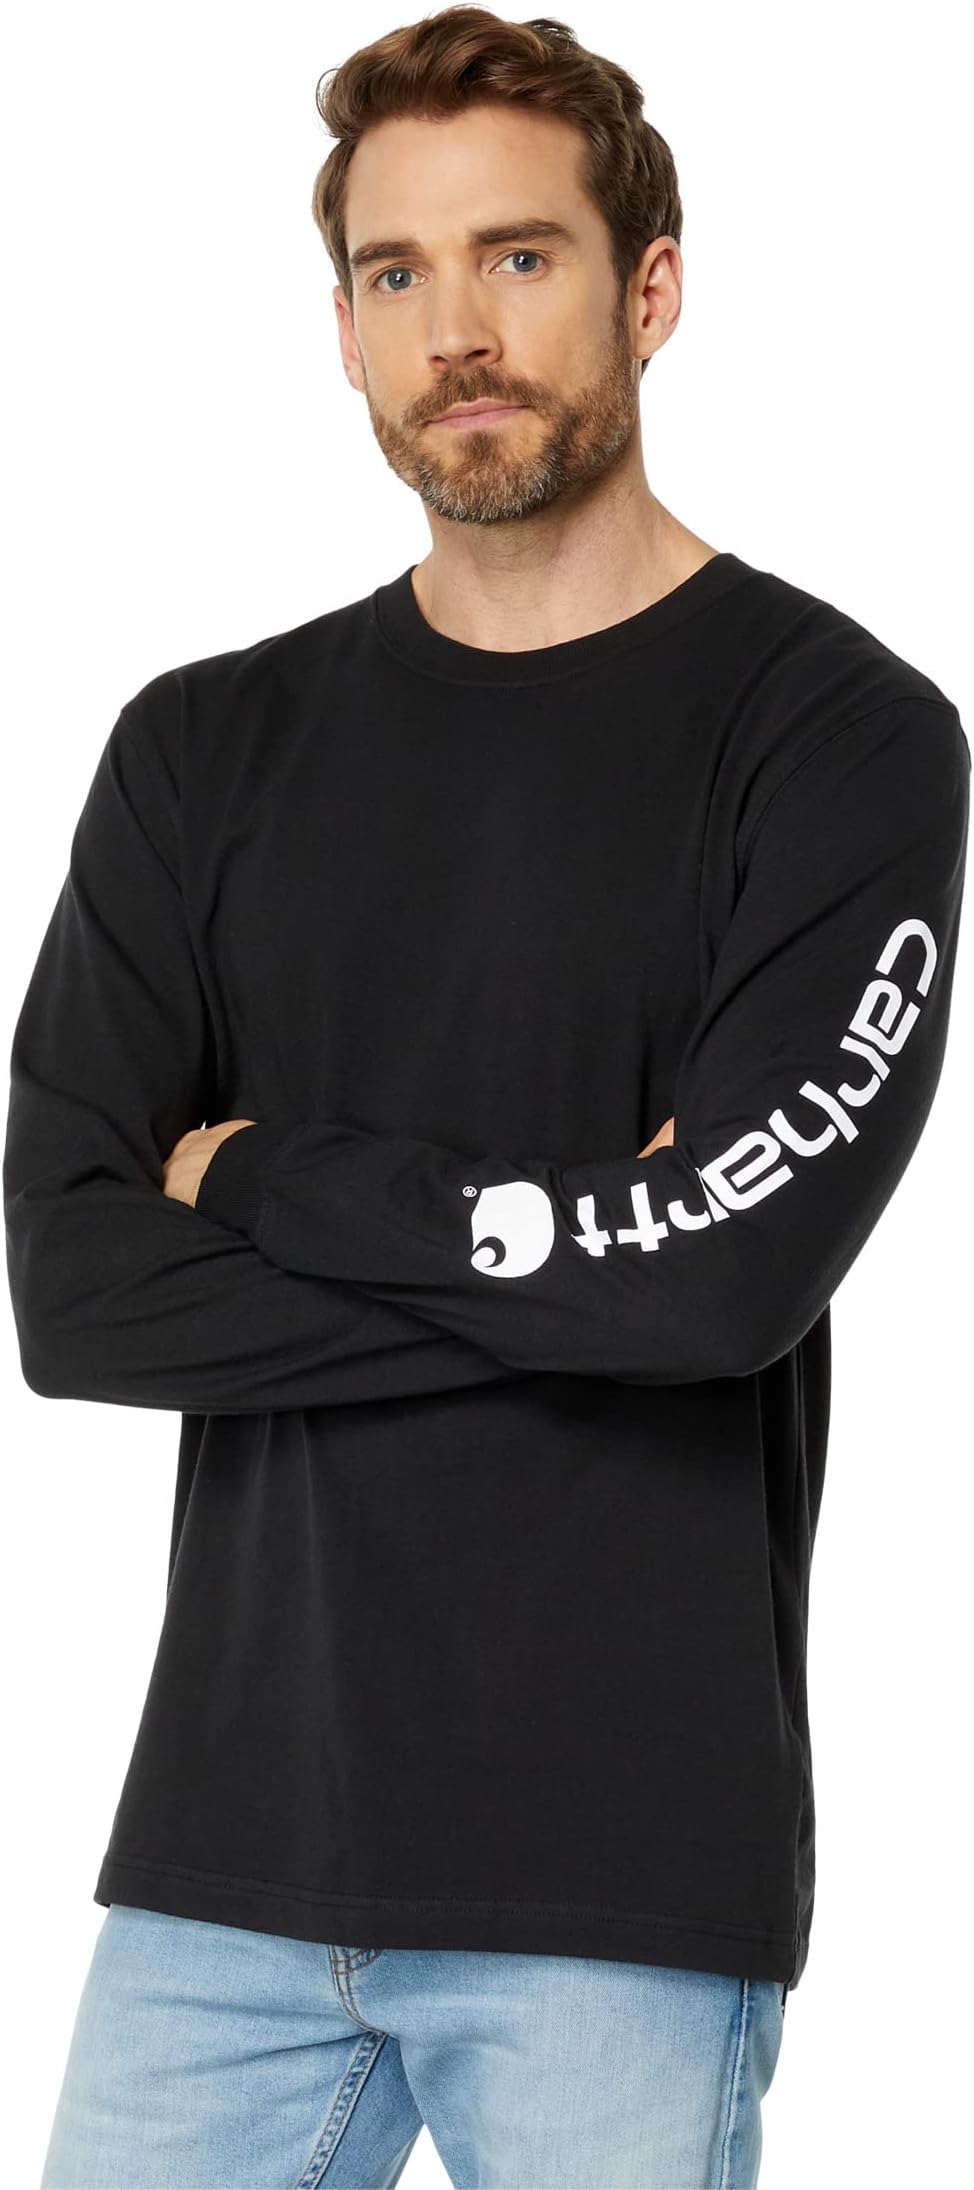 Футболка L/S с фирменным логотипом на рукавах Carhartt, черный футболка с фирменным логотипом s s carhartt цвет marmalade heather